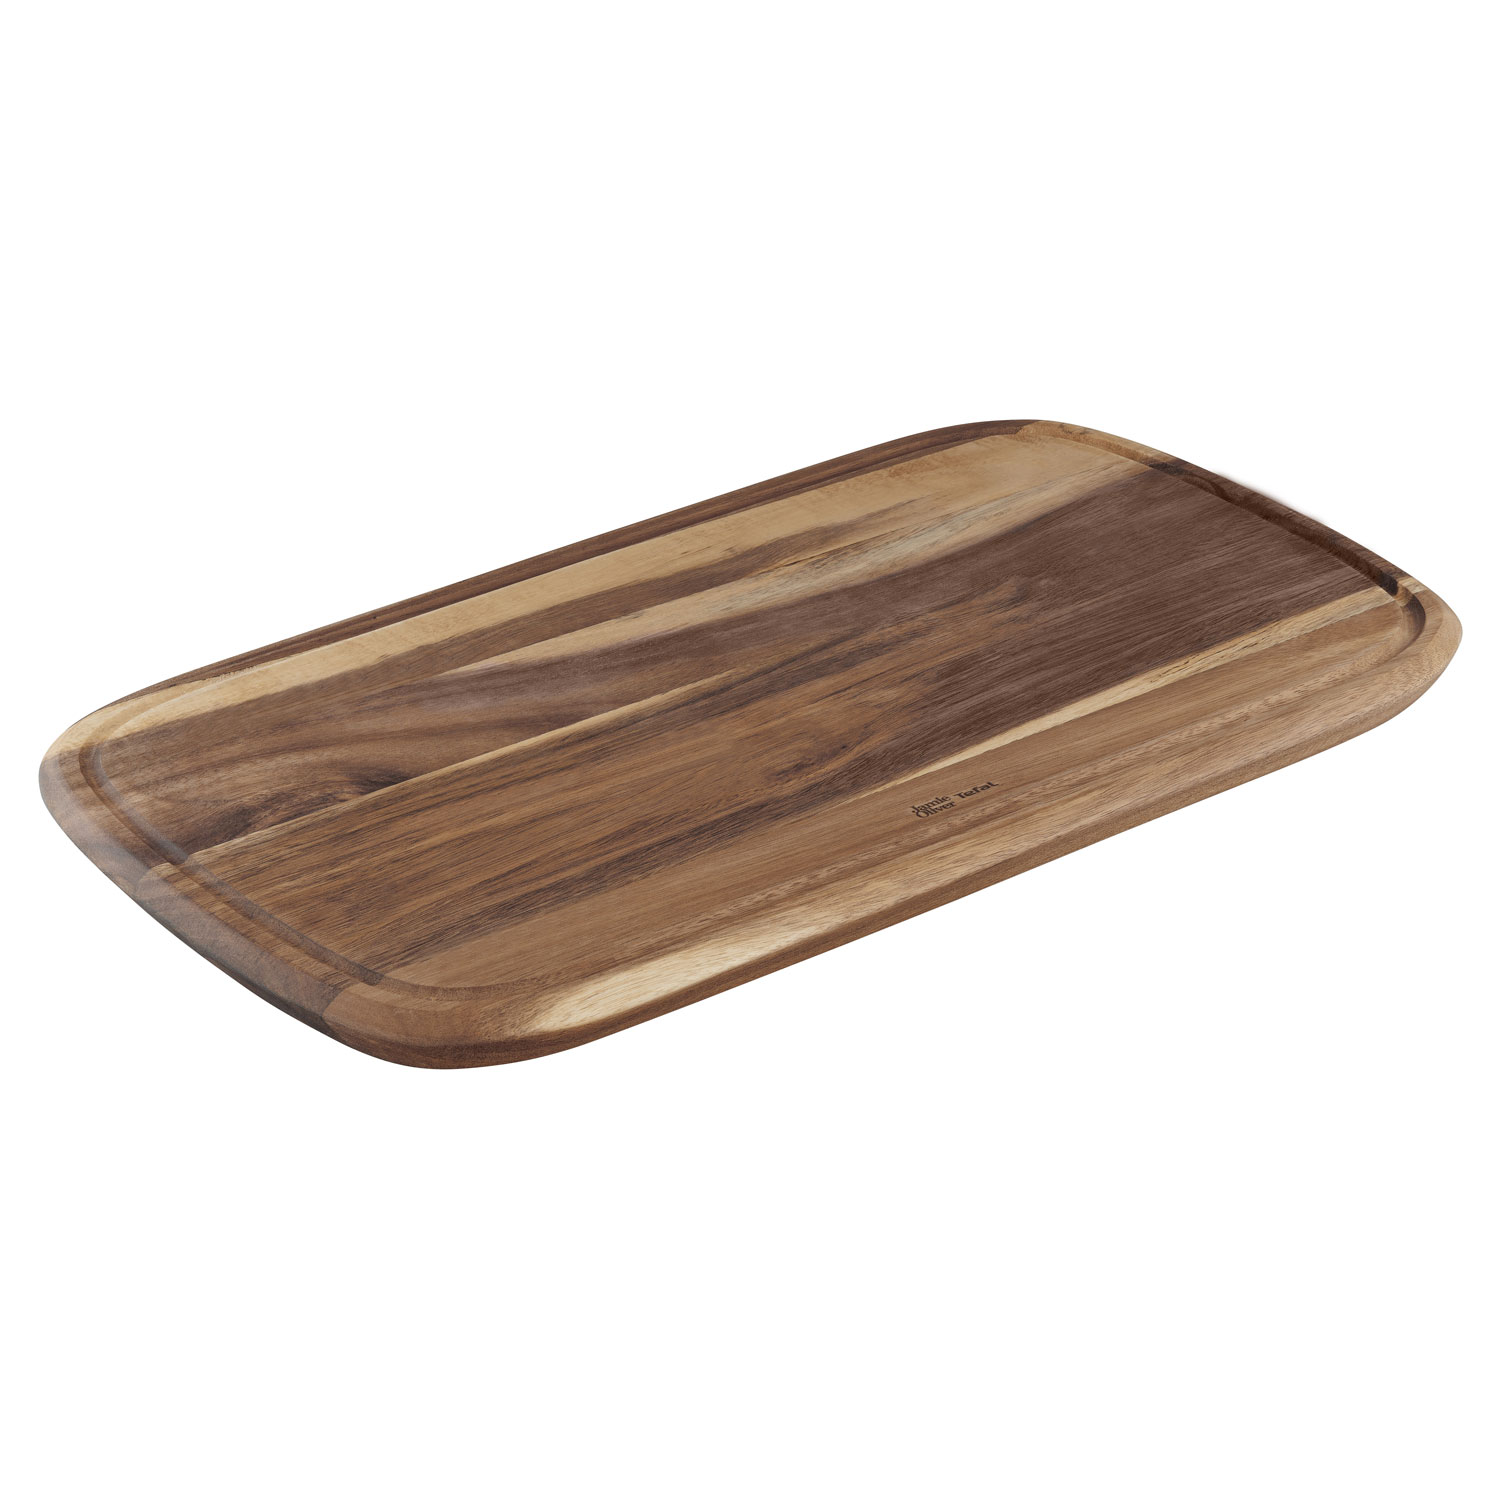 Jamie Oliver Chopping Board, cm 21,5x28 Tefal RoyalDesign - 